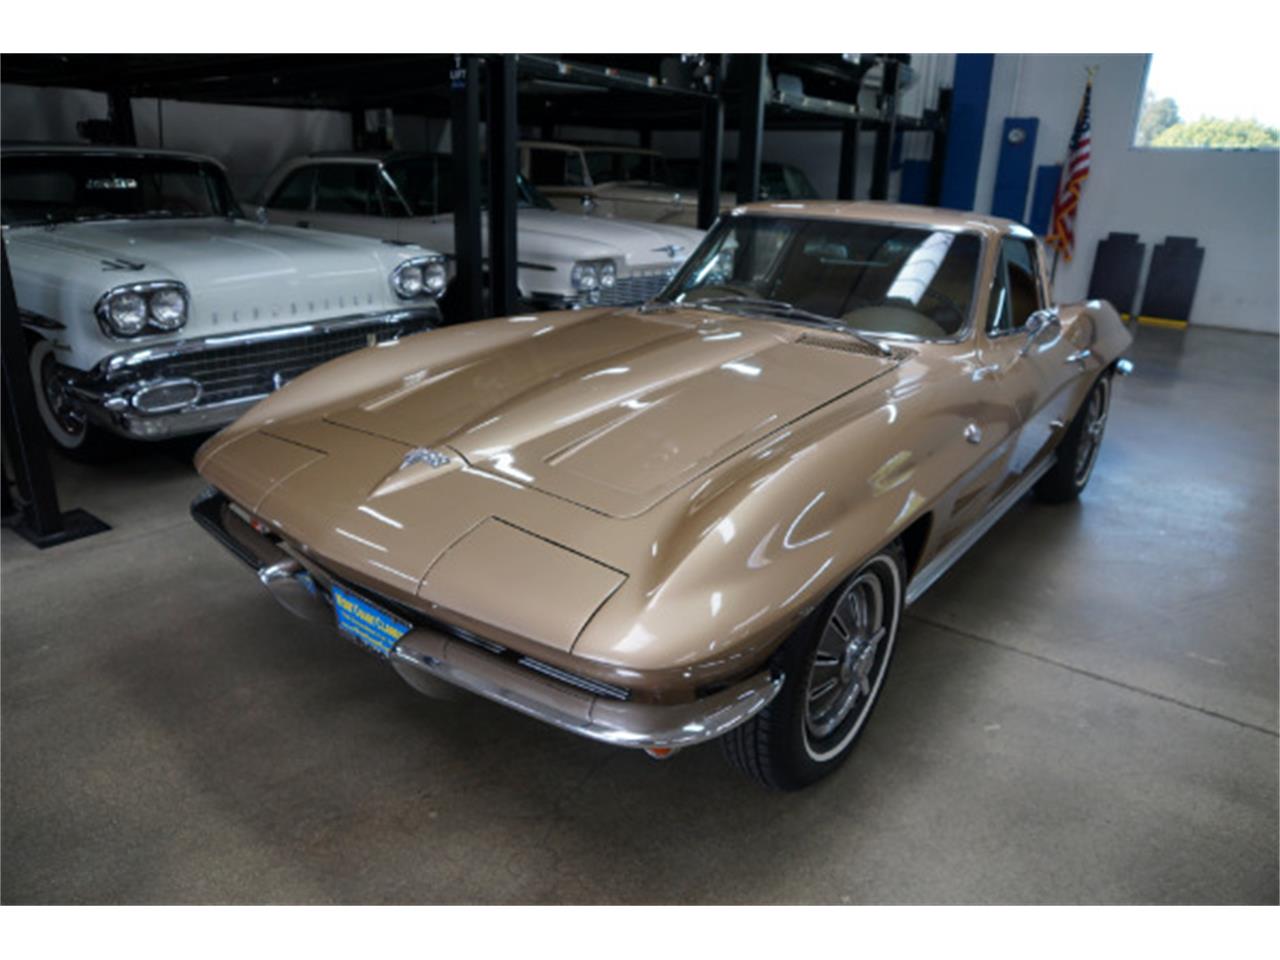 For Sale: 1964 Chevrolet Corvette in Torrance, California for sale in Torrance, CA